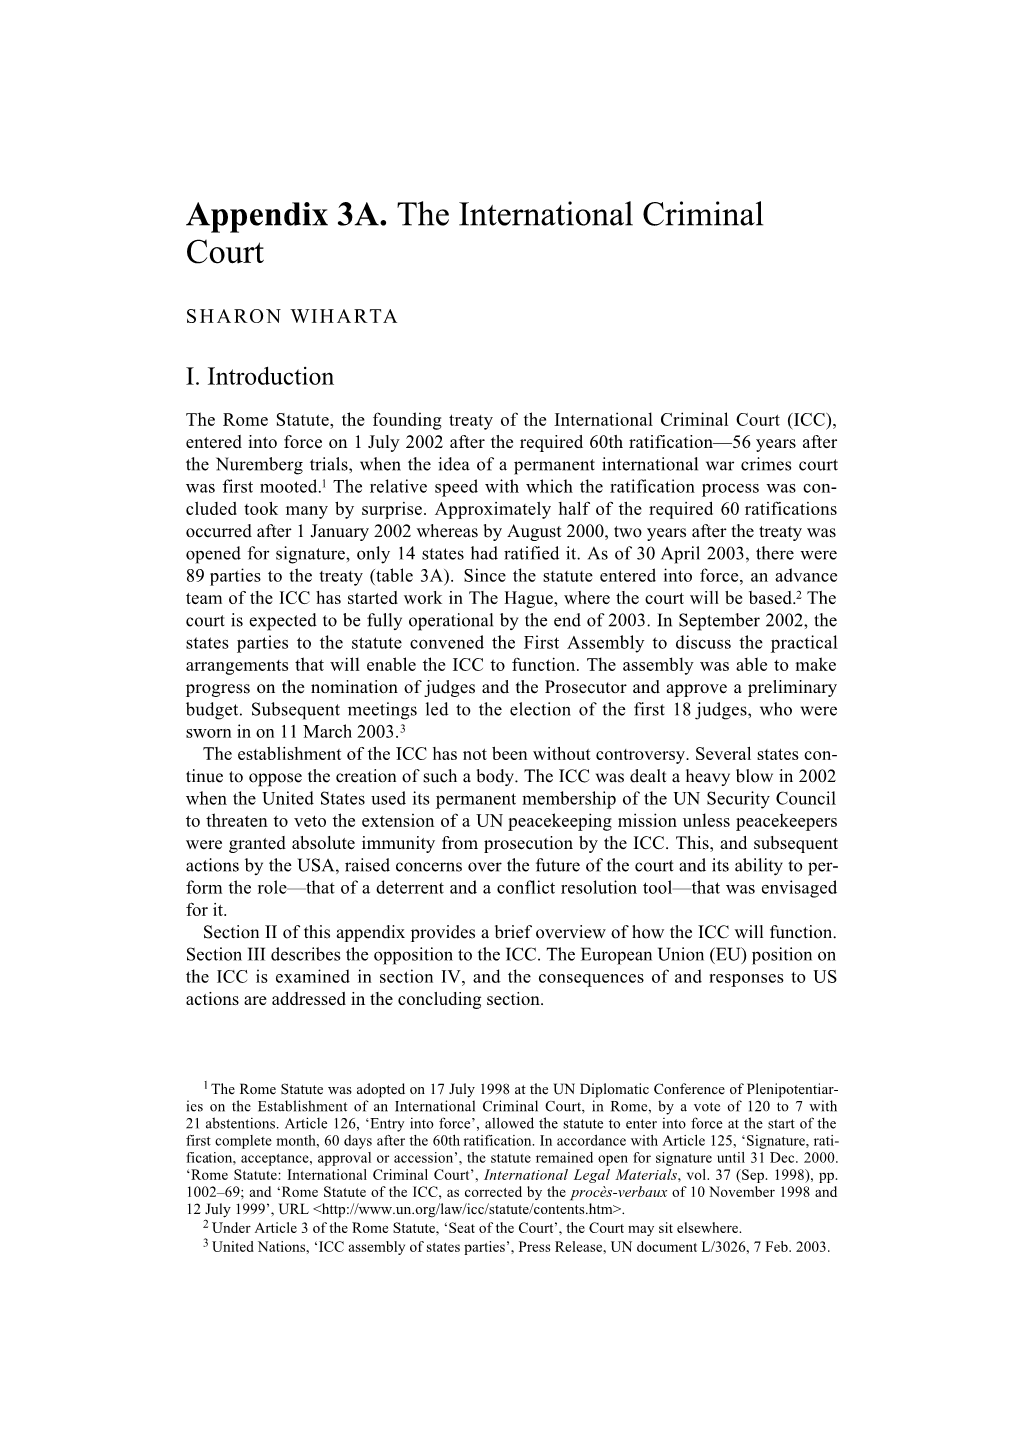 Appendix 3A. the International Criminal Court